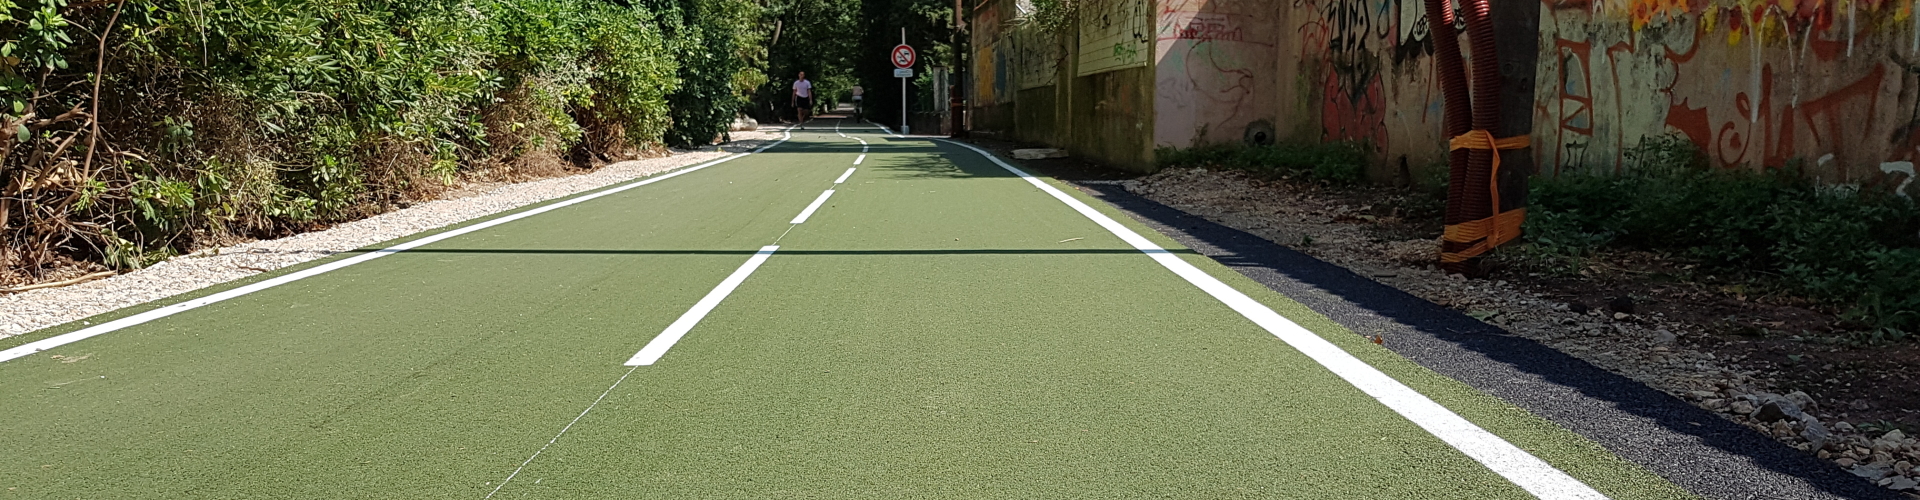 Green coloured asphalt bicycle lane